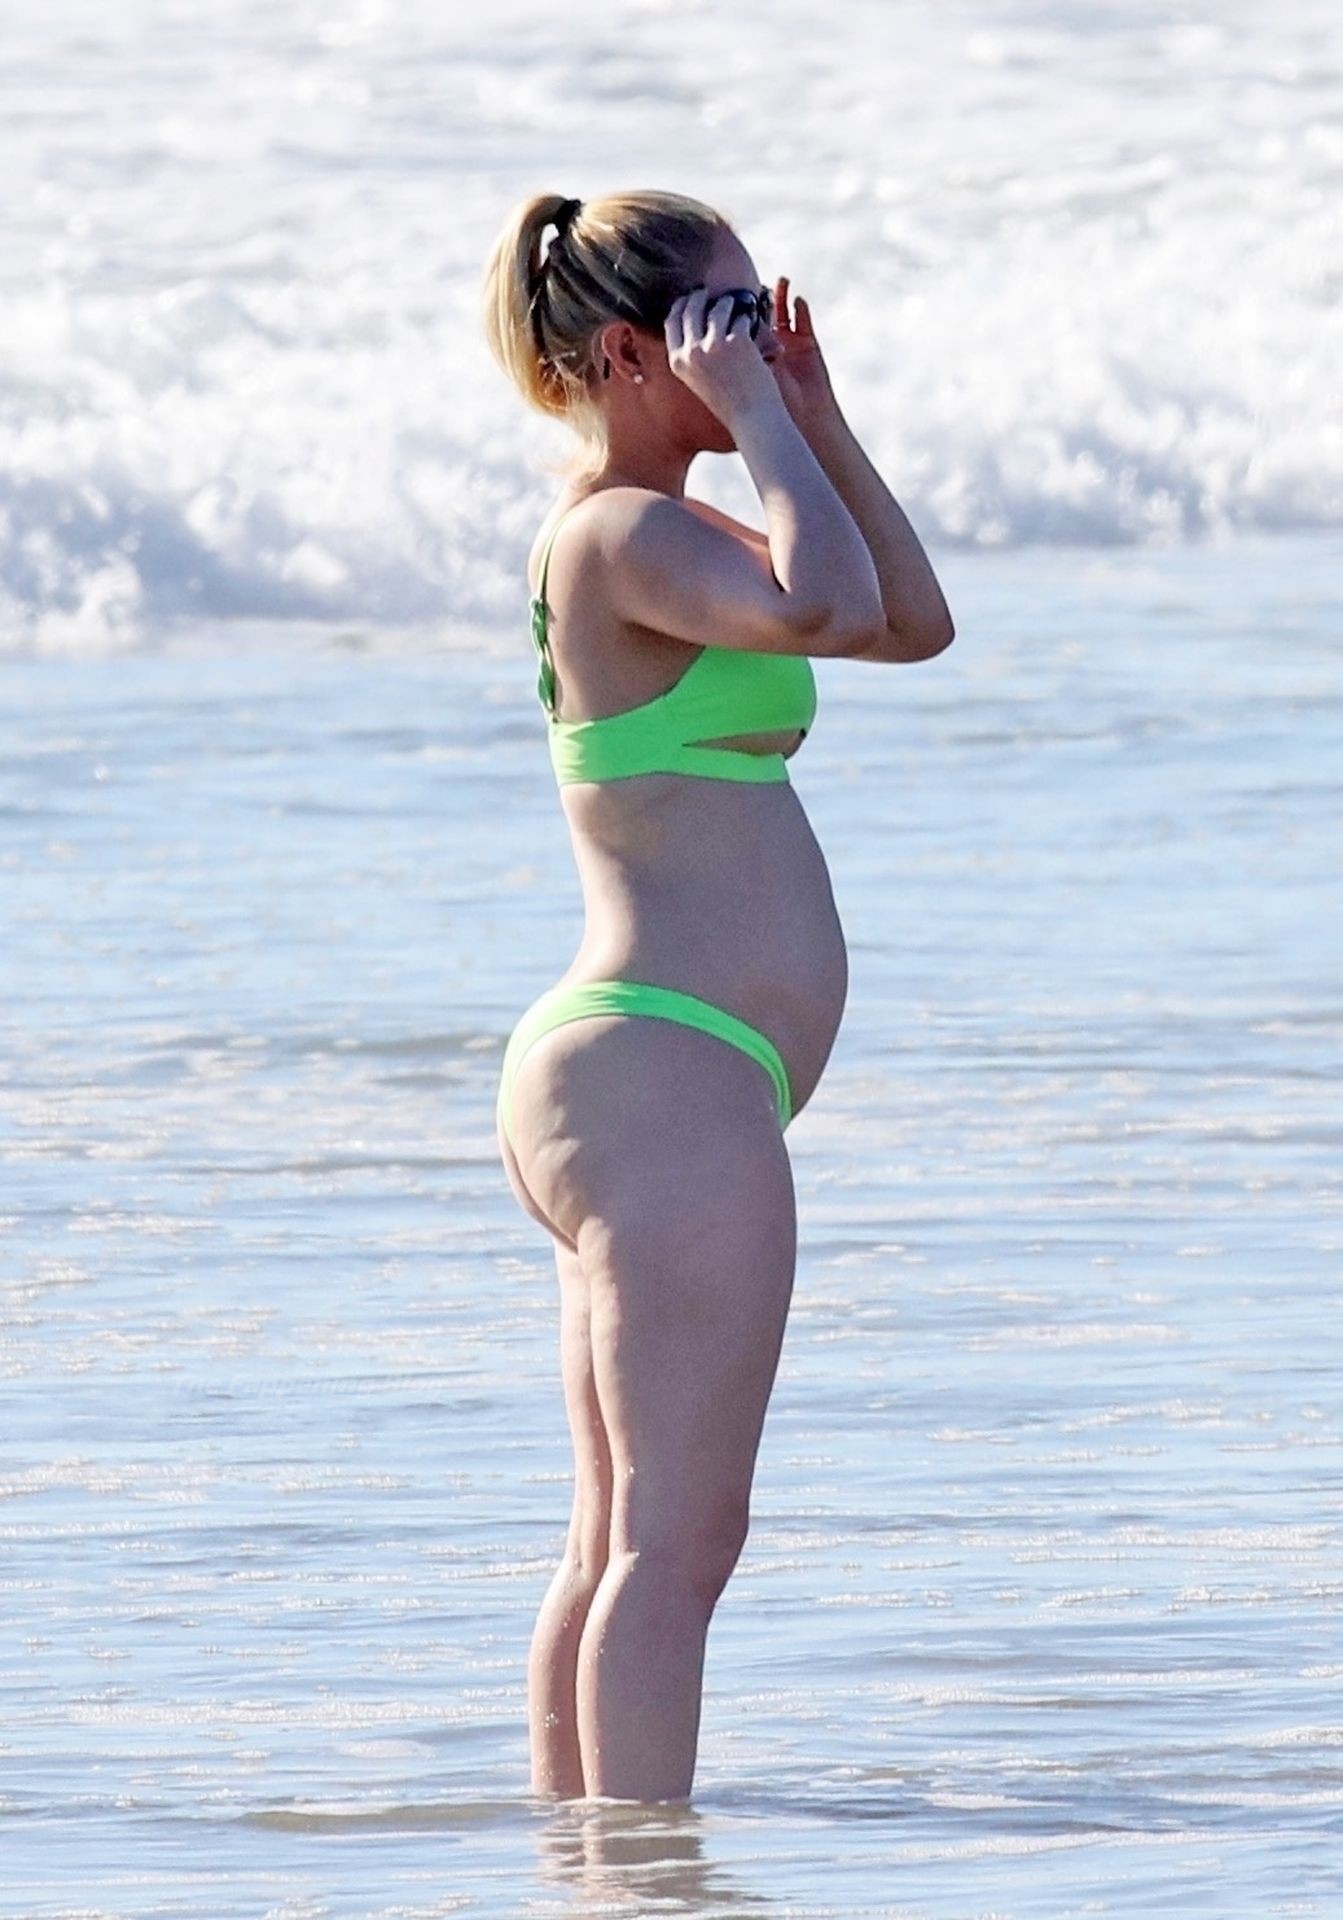 Heidi Pratt Sparks Pregnancy Rumors as She Frolics on the Beach in Carpinteria (44
Photos)